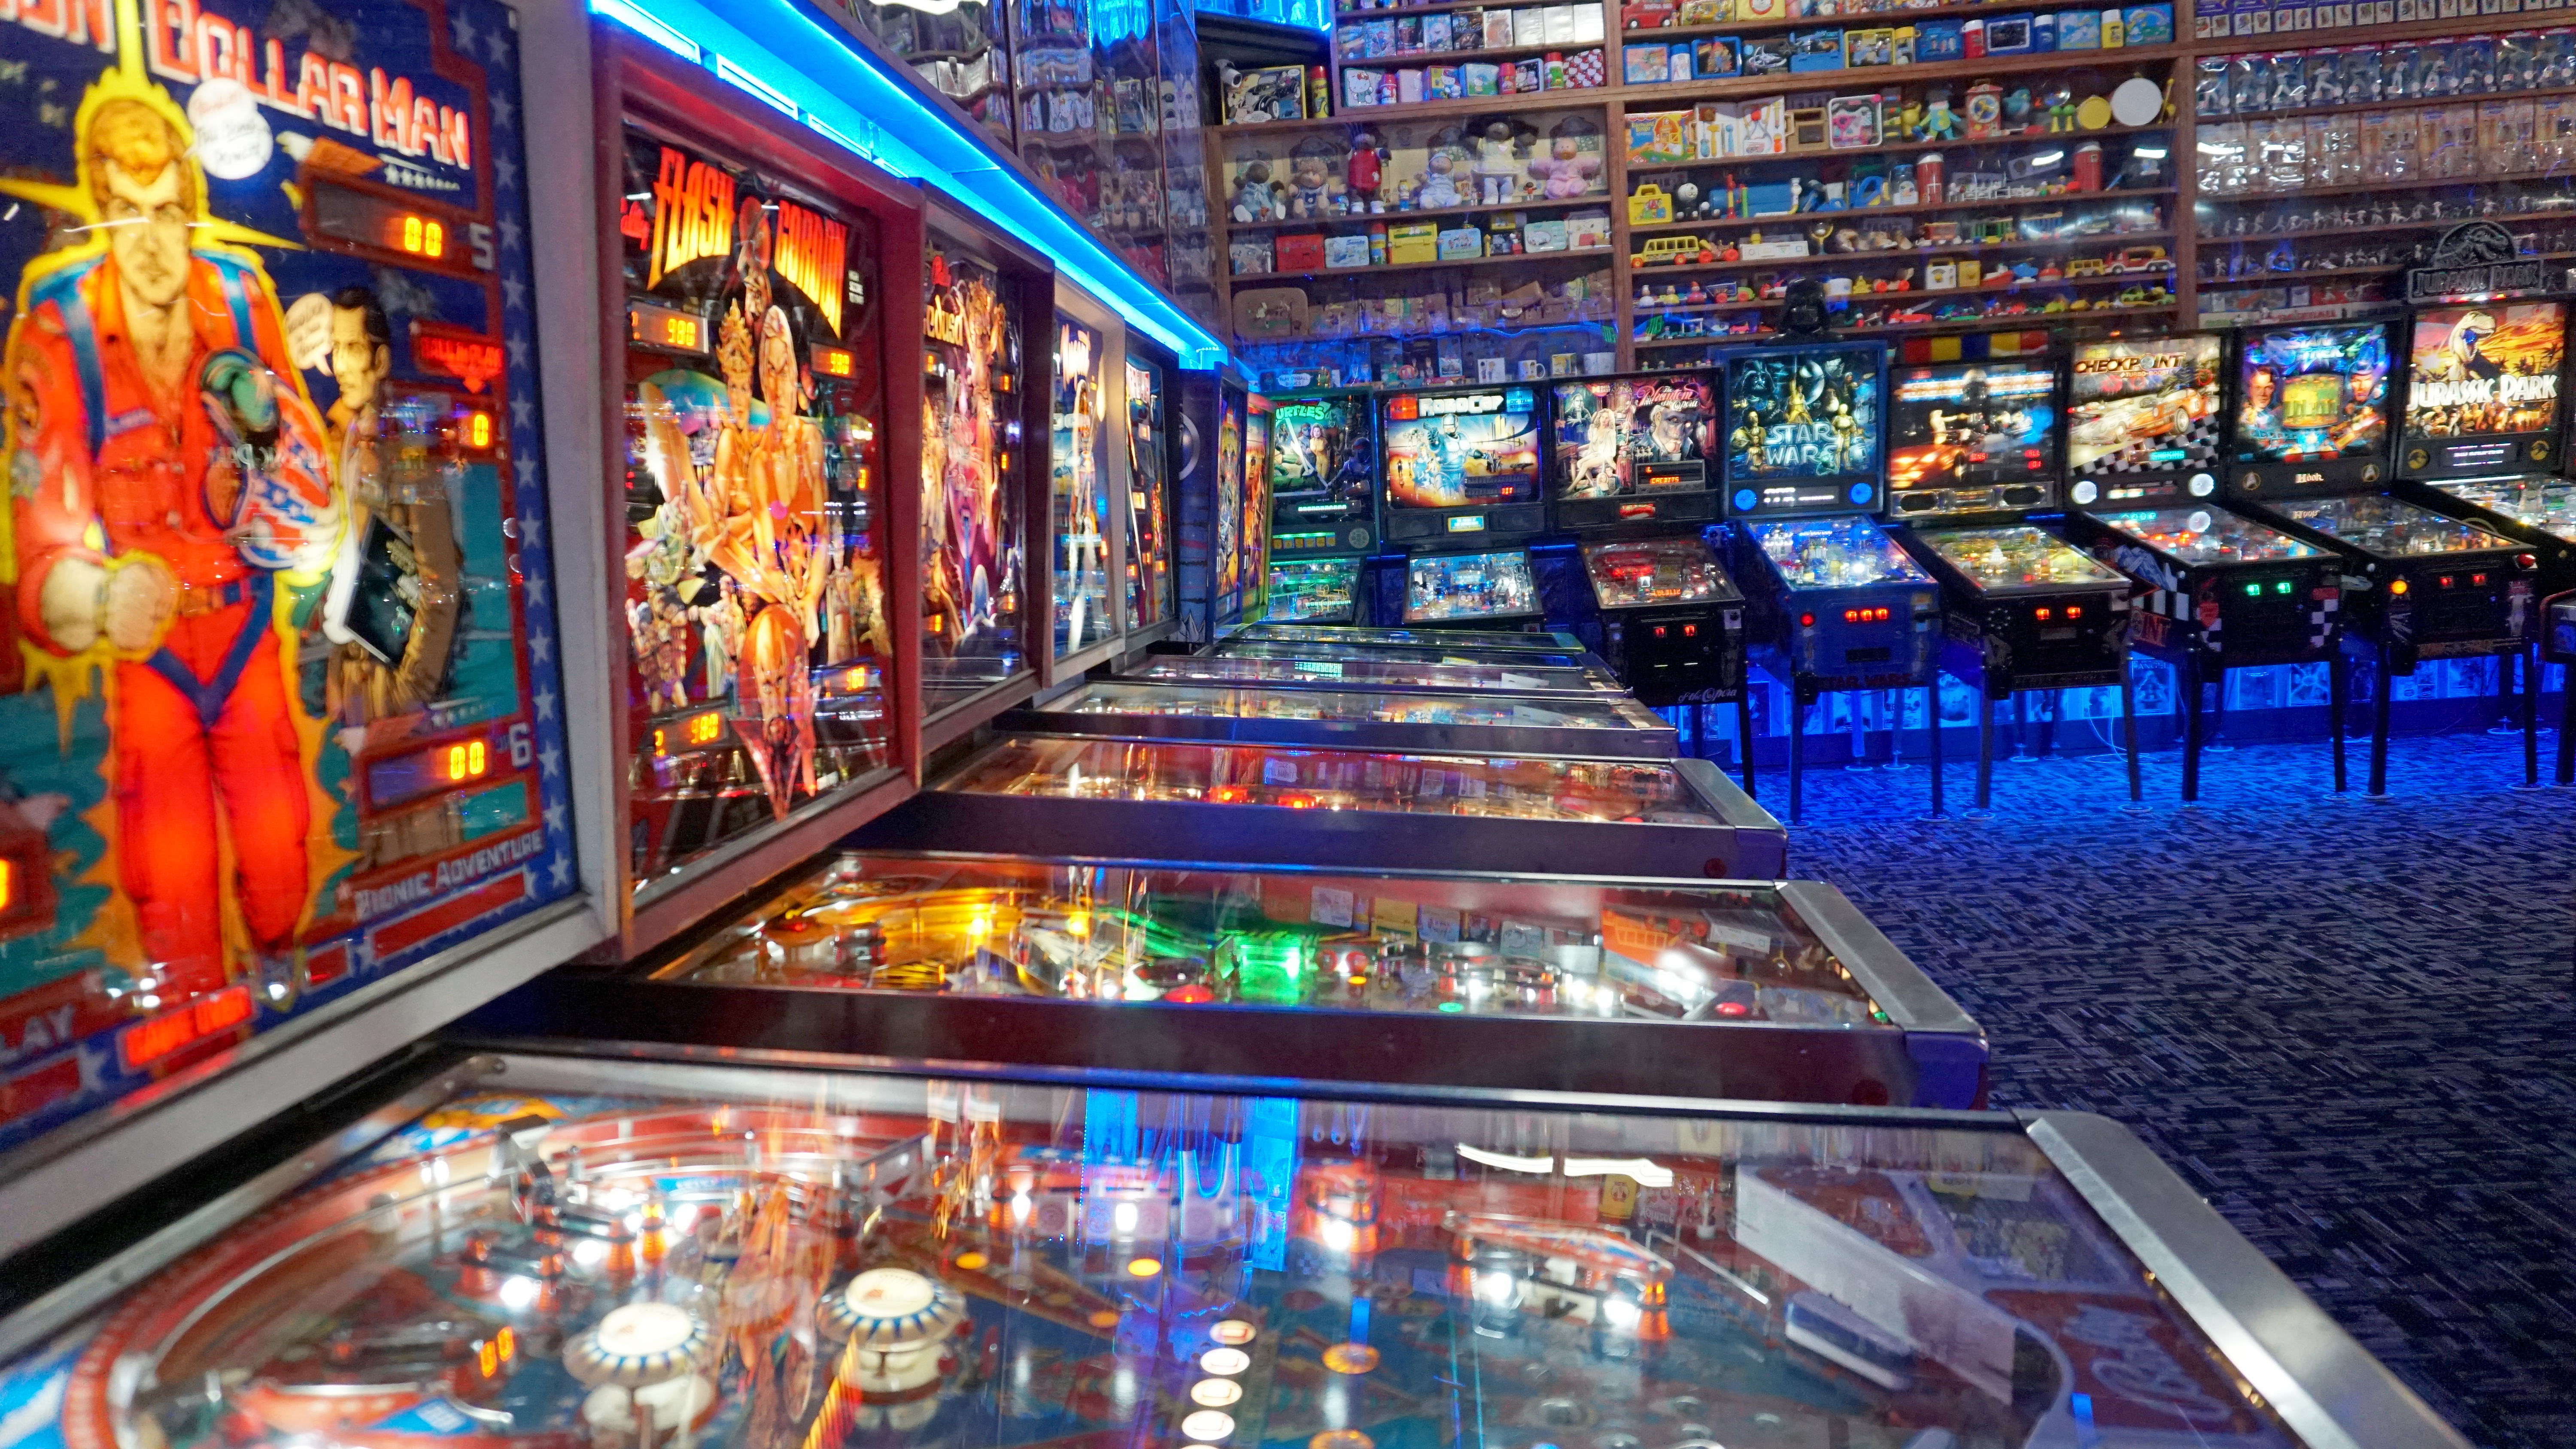 Pinball museum in Hillsboro gains national attention